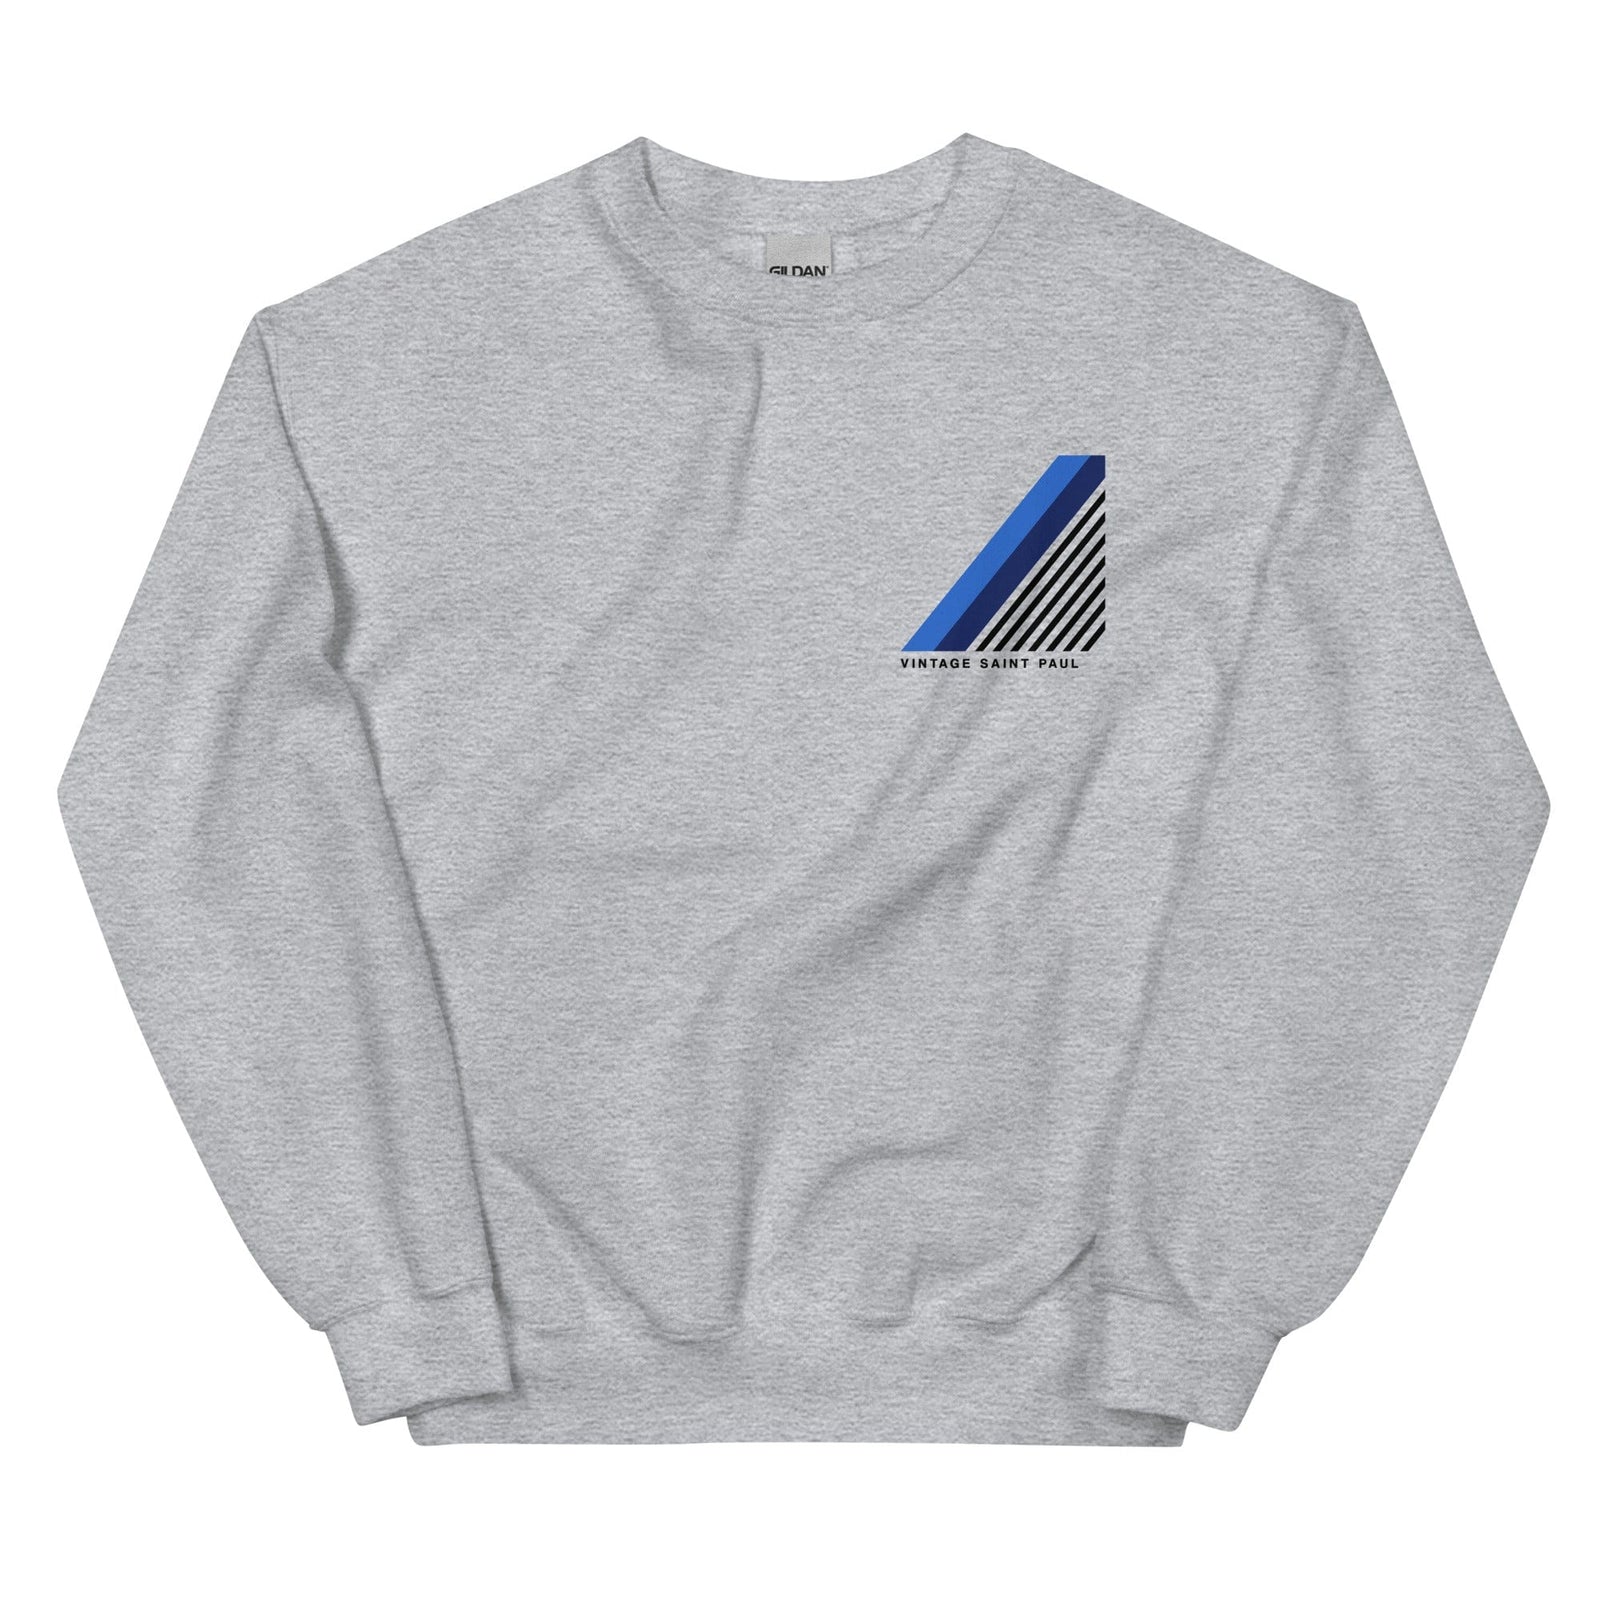 City Shirt Co Vintage Saint Paul Sweatshirt Sport Grey / S